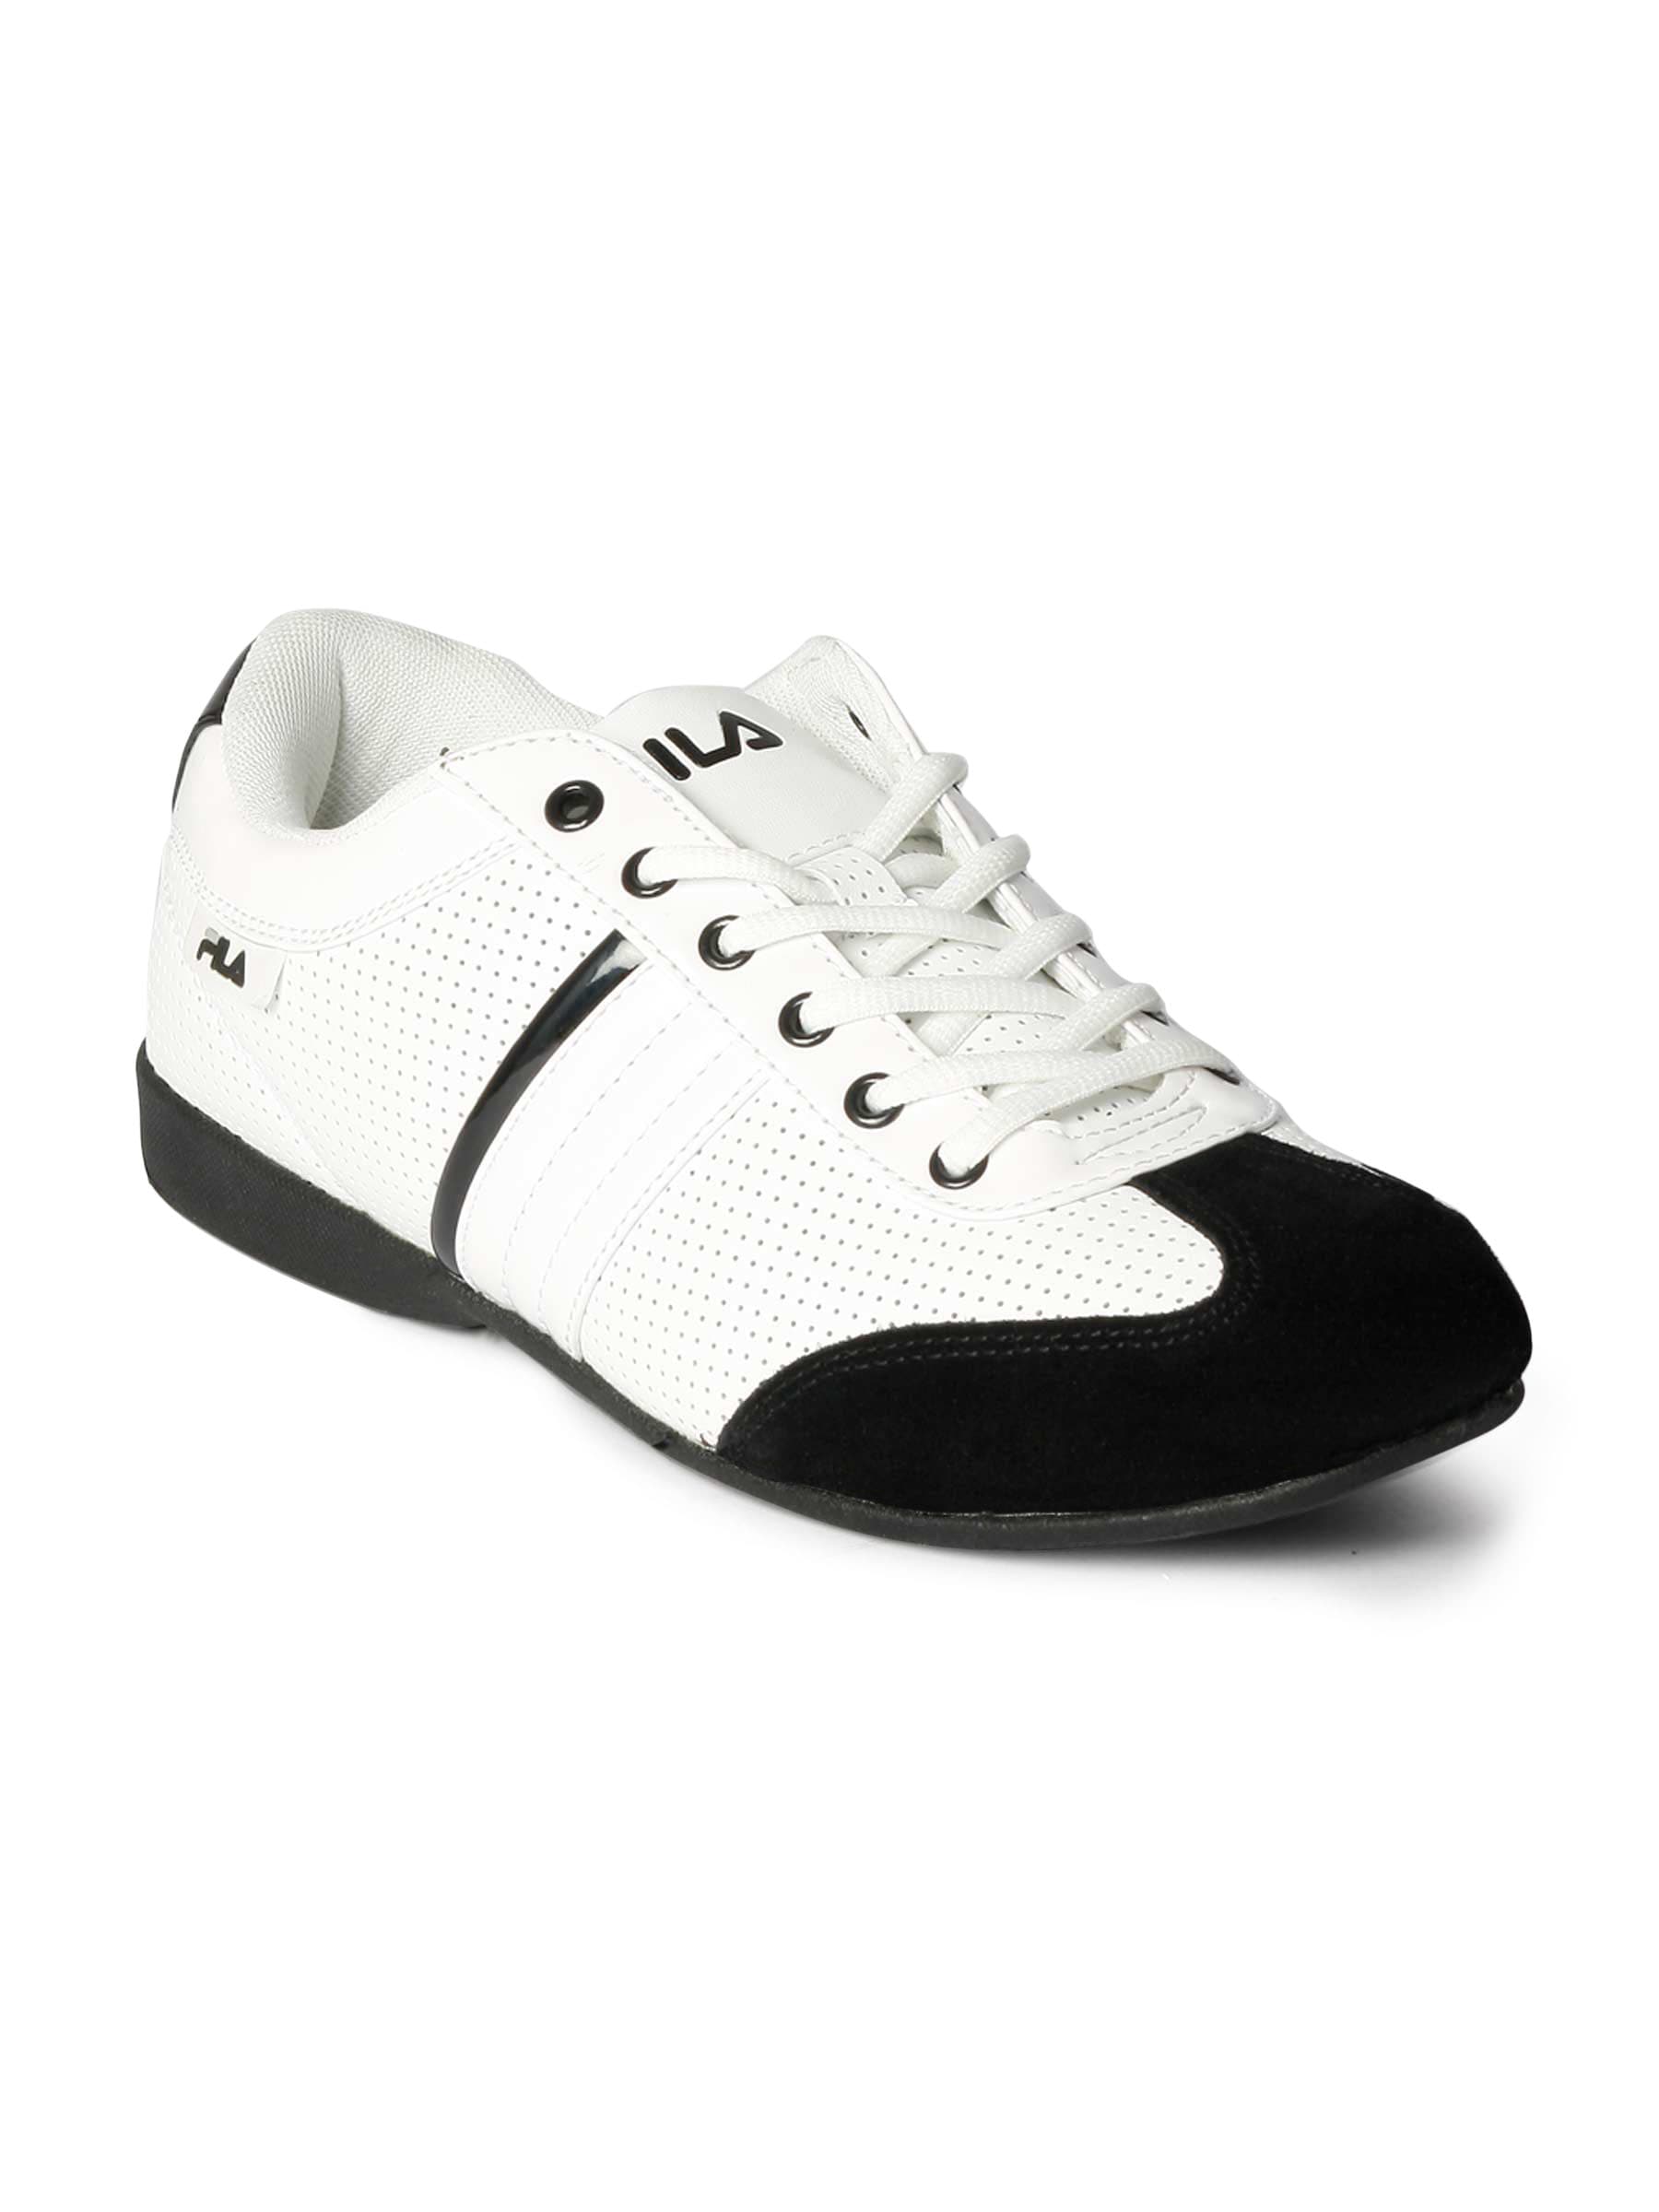 Fila Men Tubes White Casual Shoes